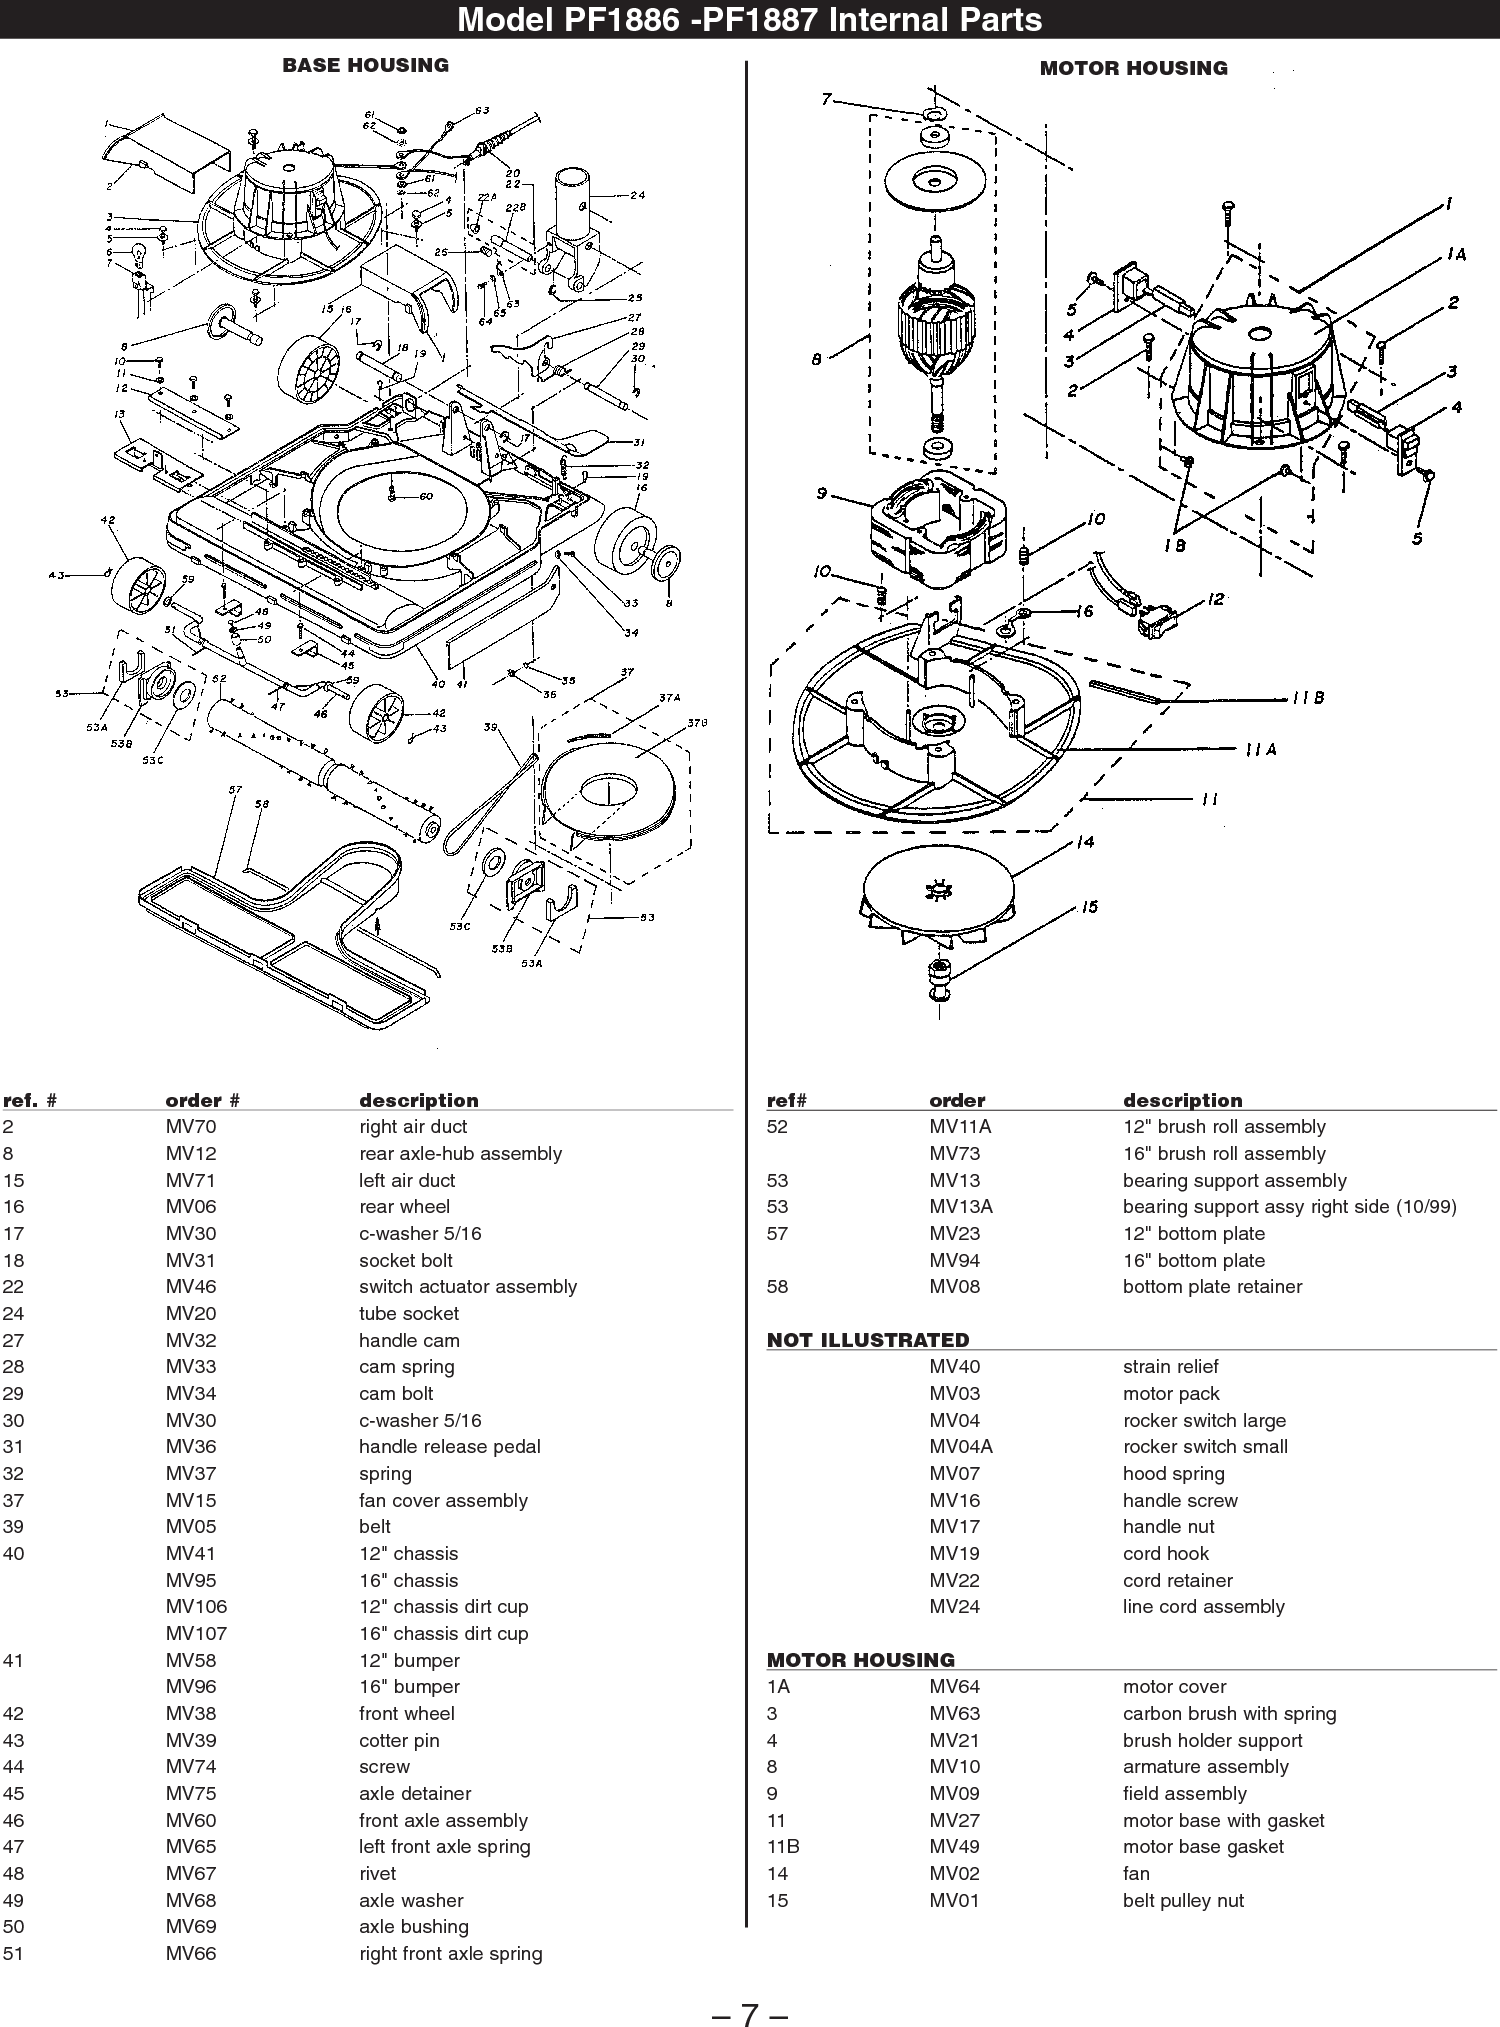 Page 7 of 8 - Sweepscrub Powr-Flite-Pf1886-1887-Vacuum-Operators-Manual User Manual